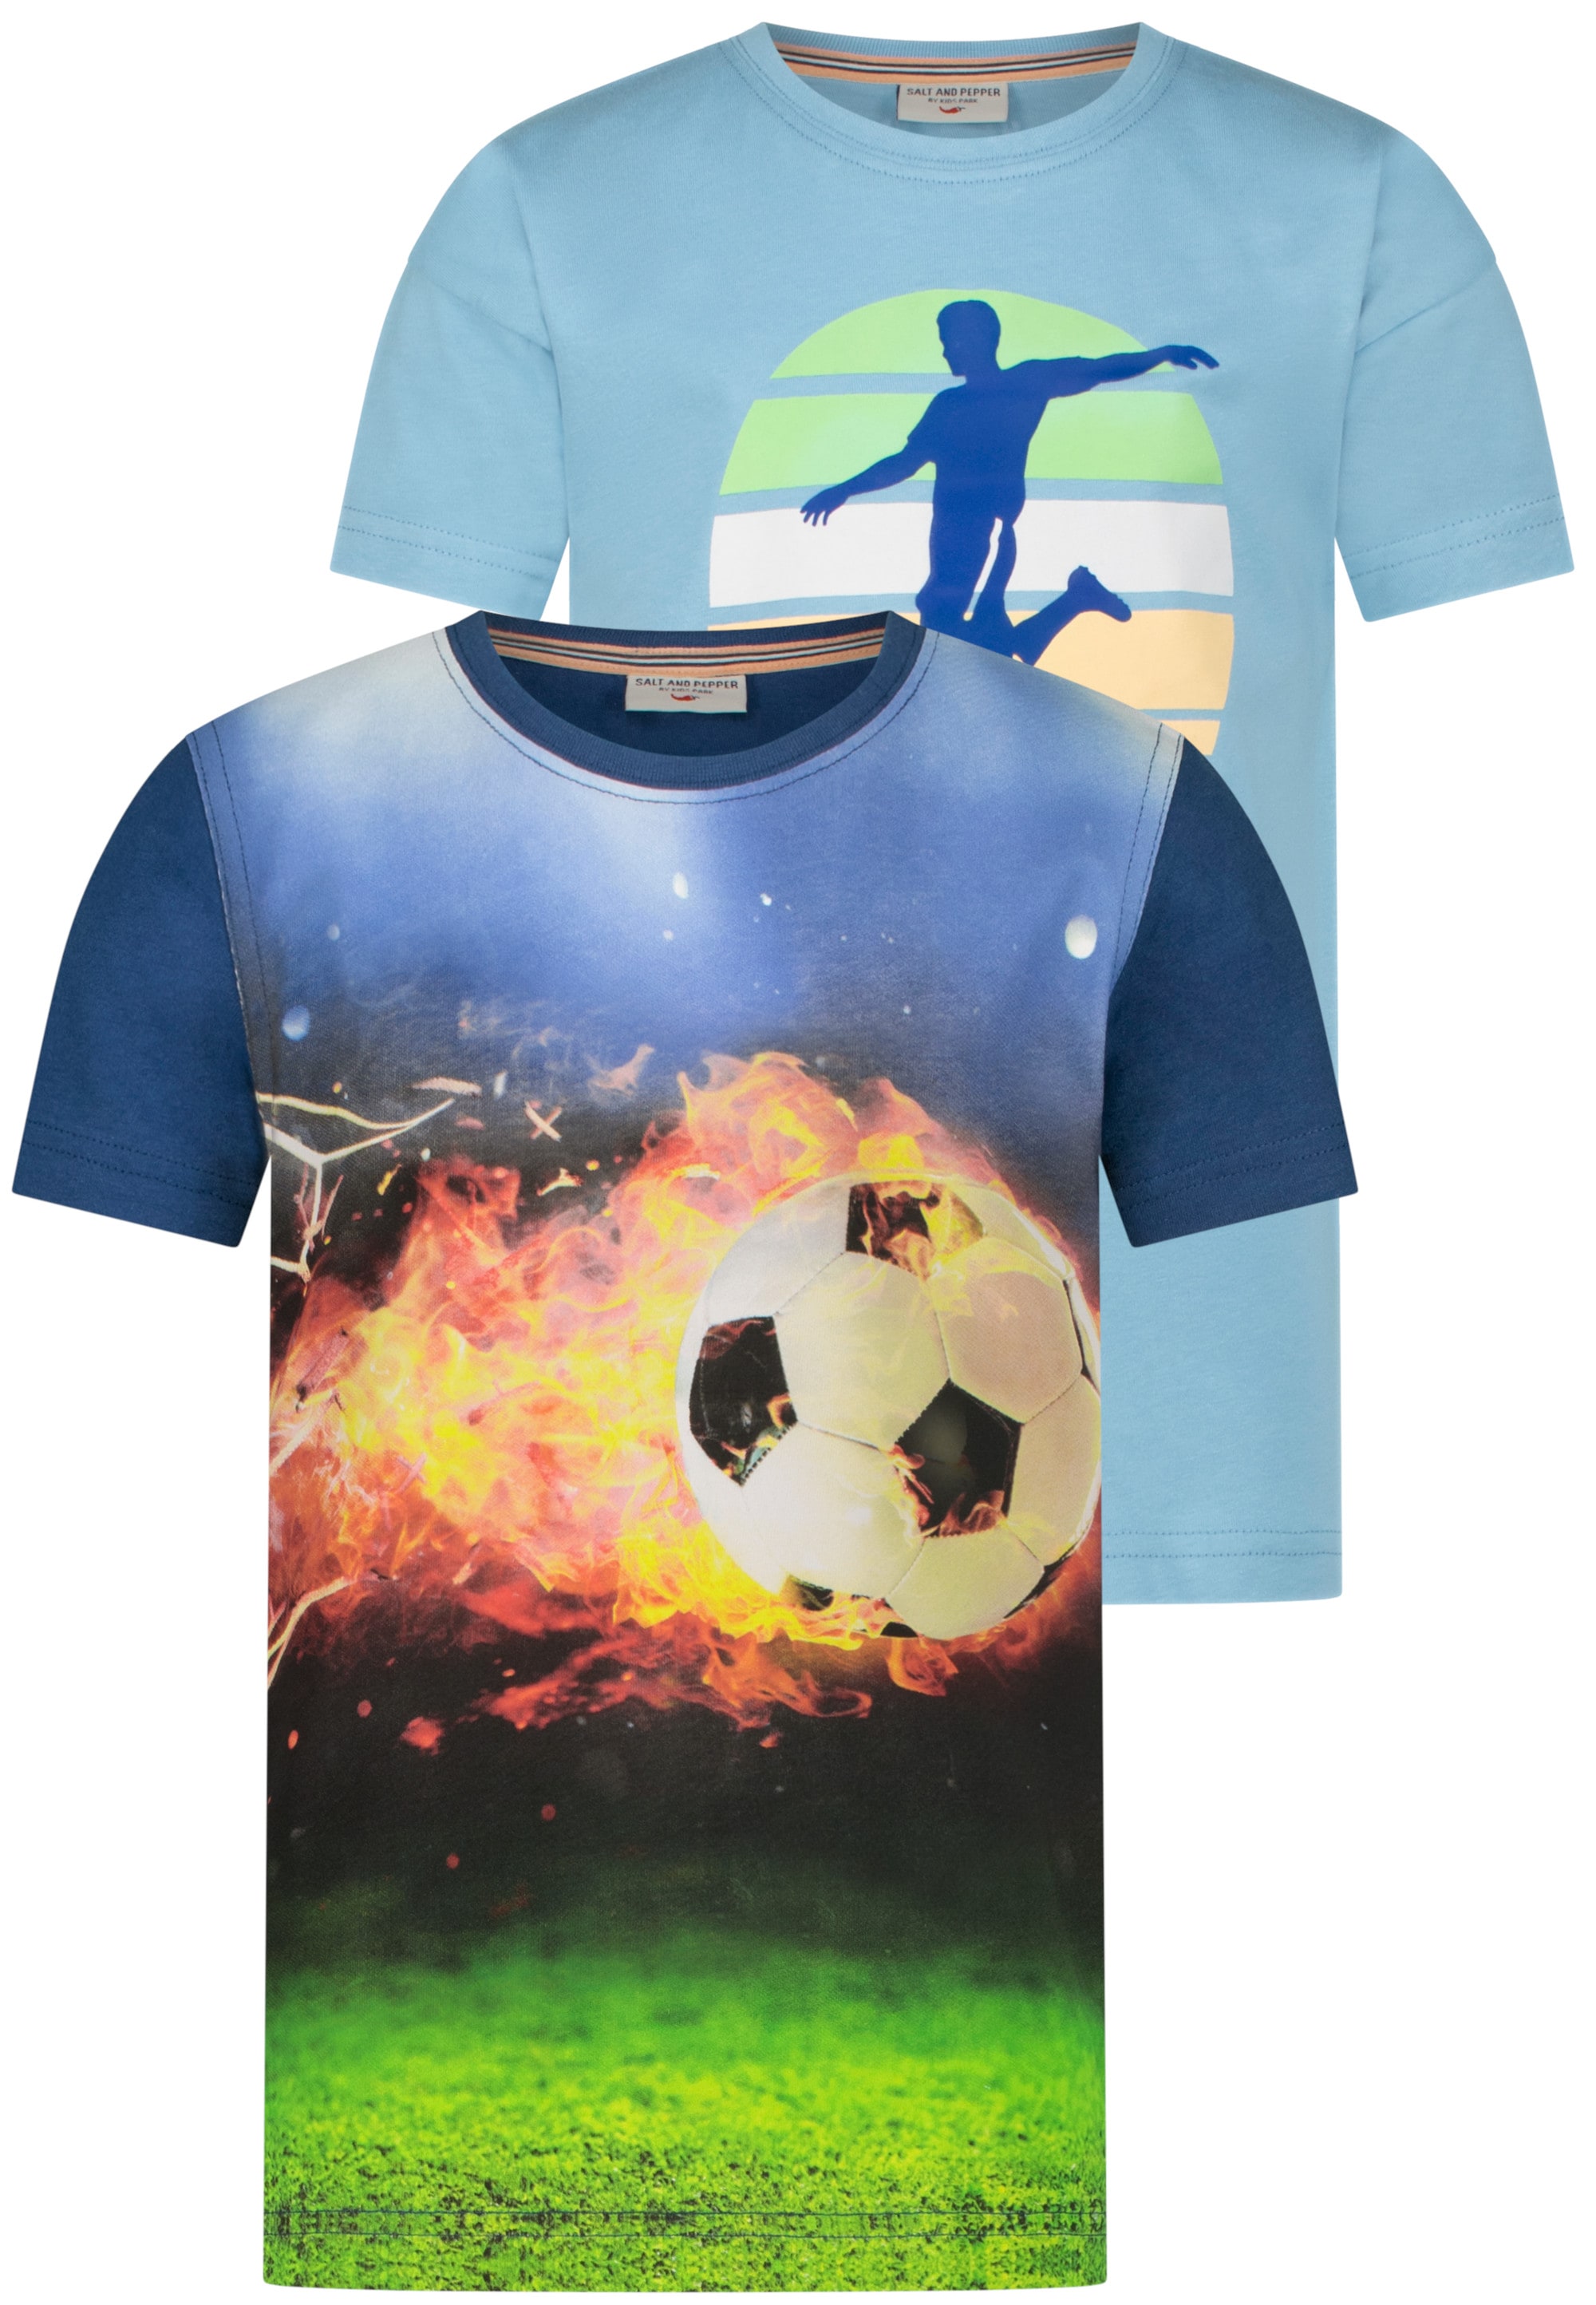 SALT AND PEPPER T-Shirt »Torjäger«, (2 tlg.), mit tollem Fußballmotiv